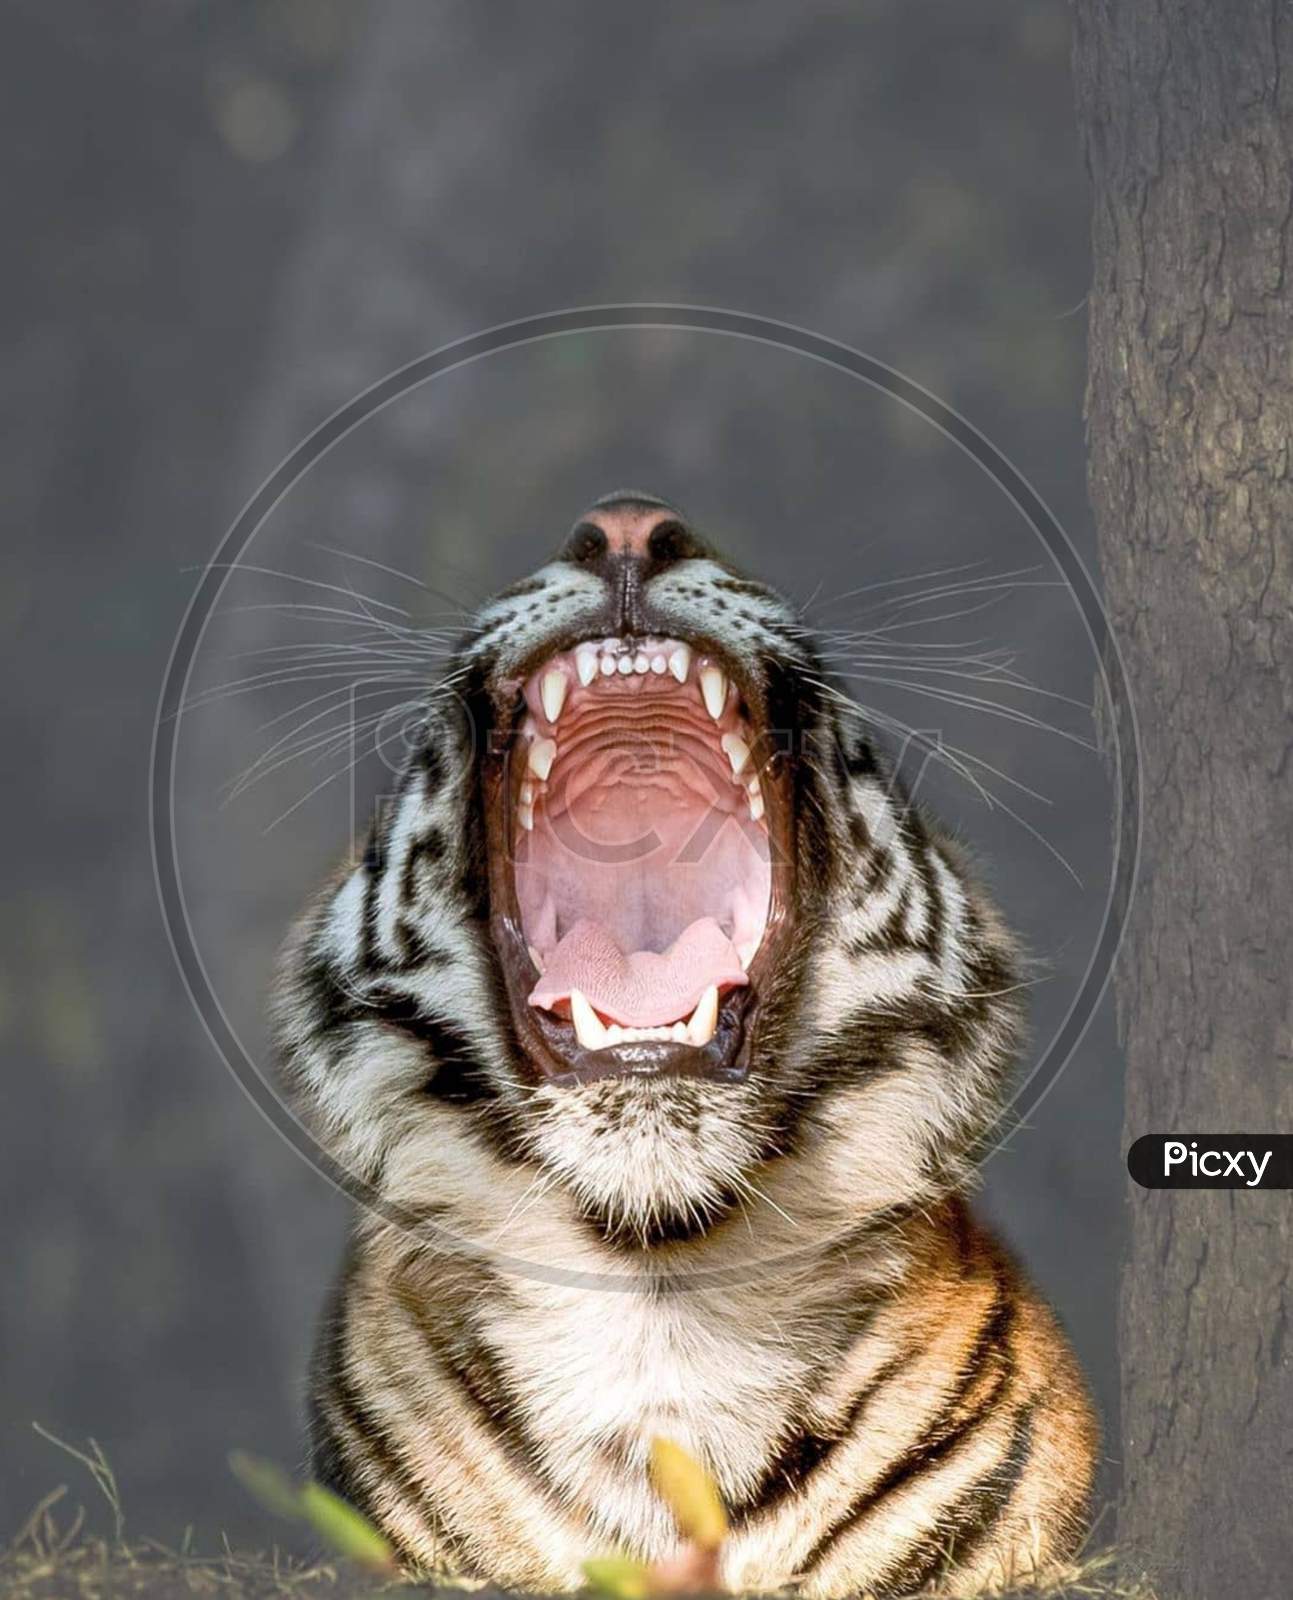 Big mouth of a bengal tiger